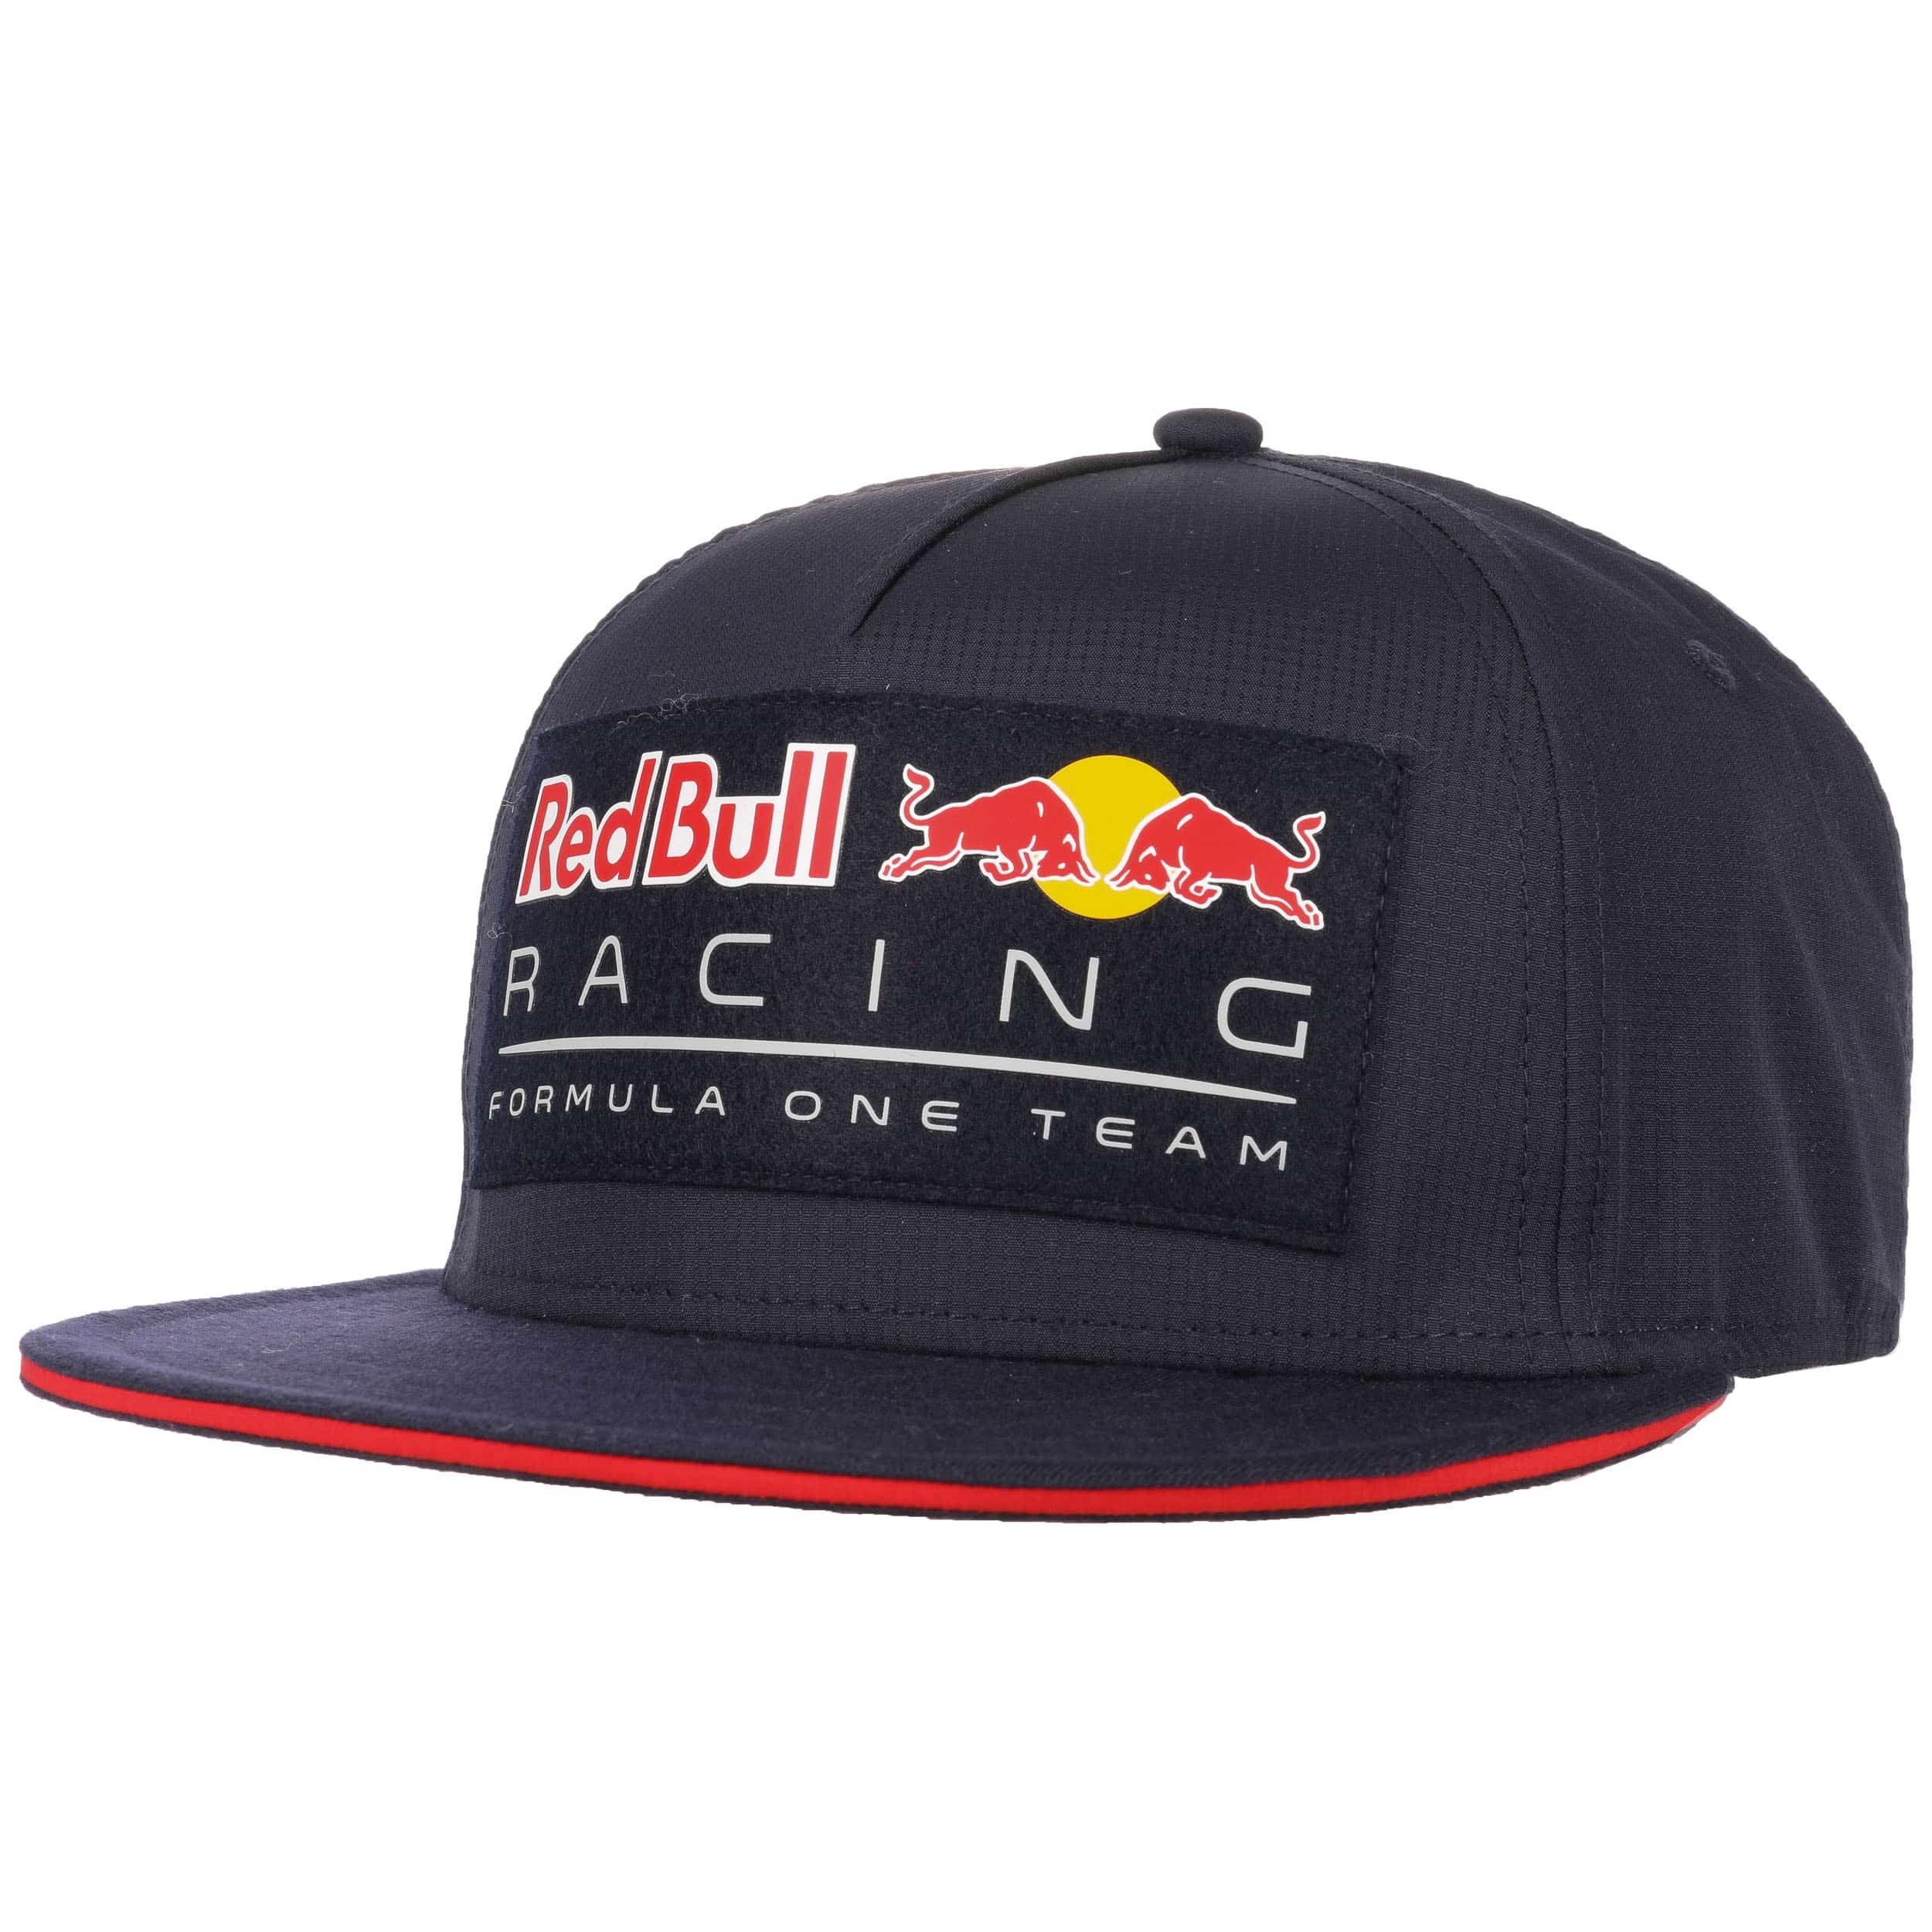 Red Bull Racing Cap by PUMA - 32,95